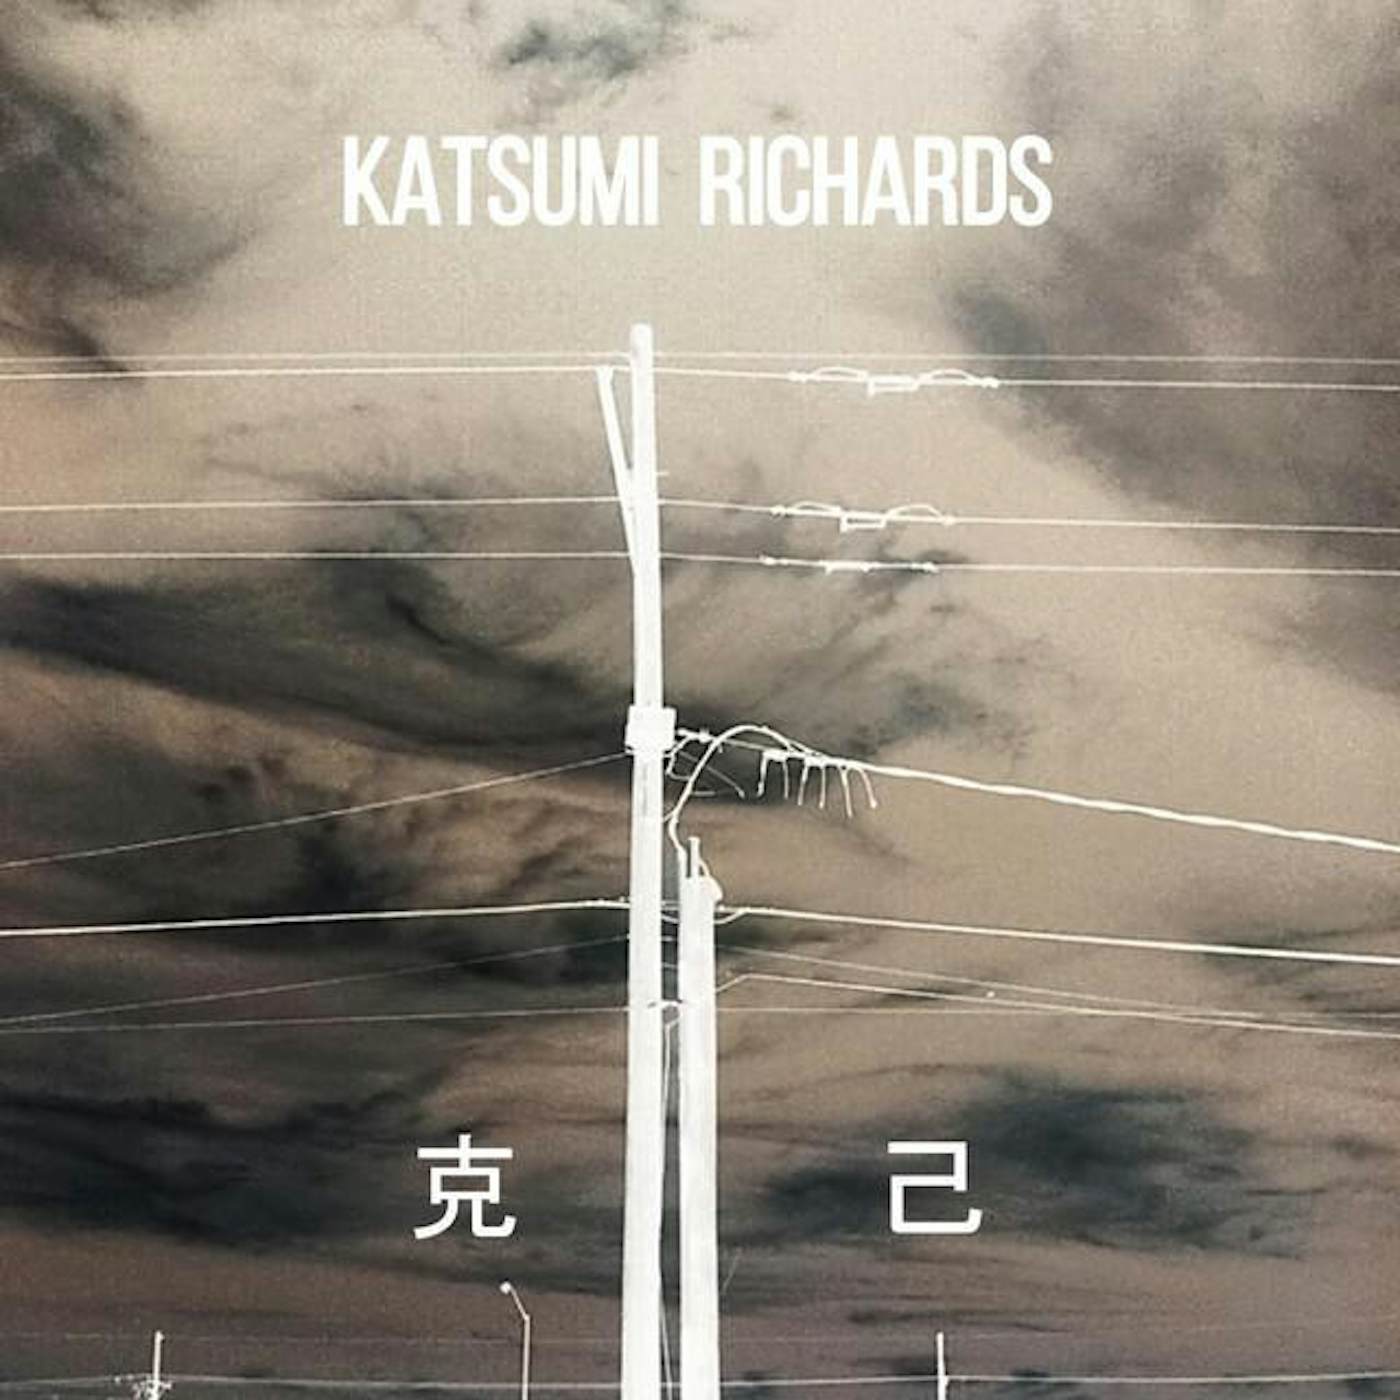 Katsumi Richards